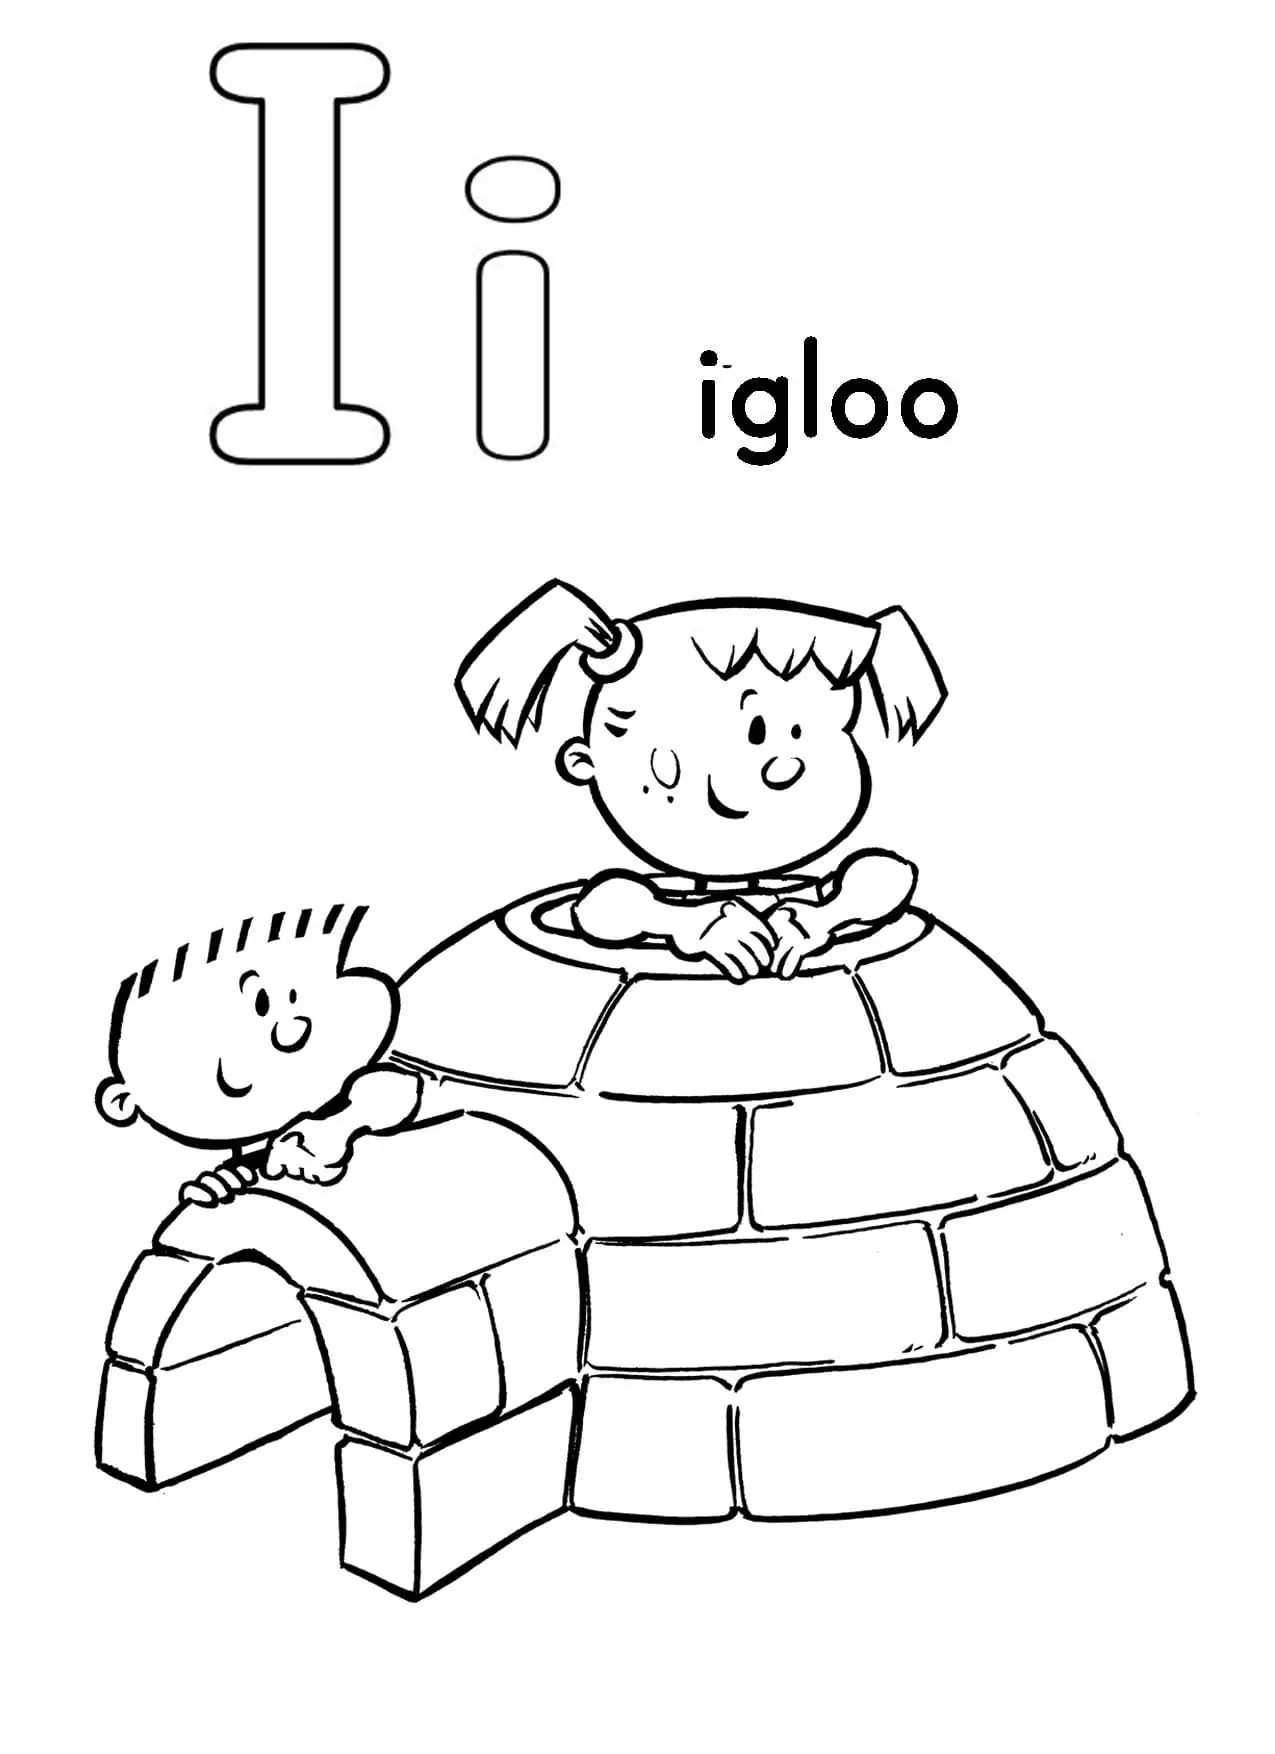 Free Igloo for Kids